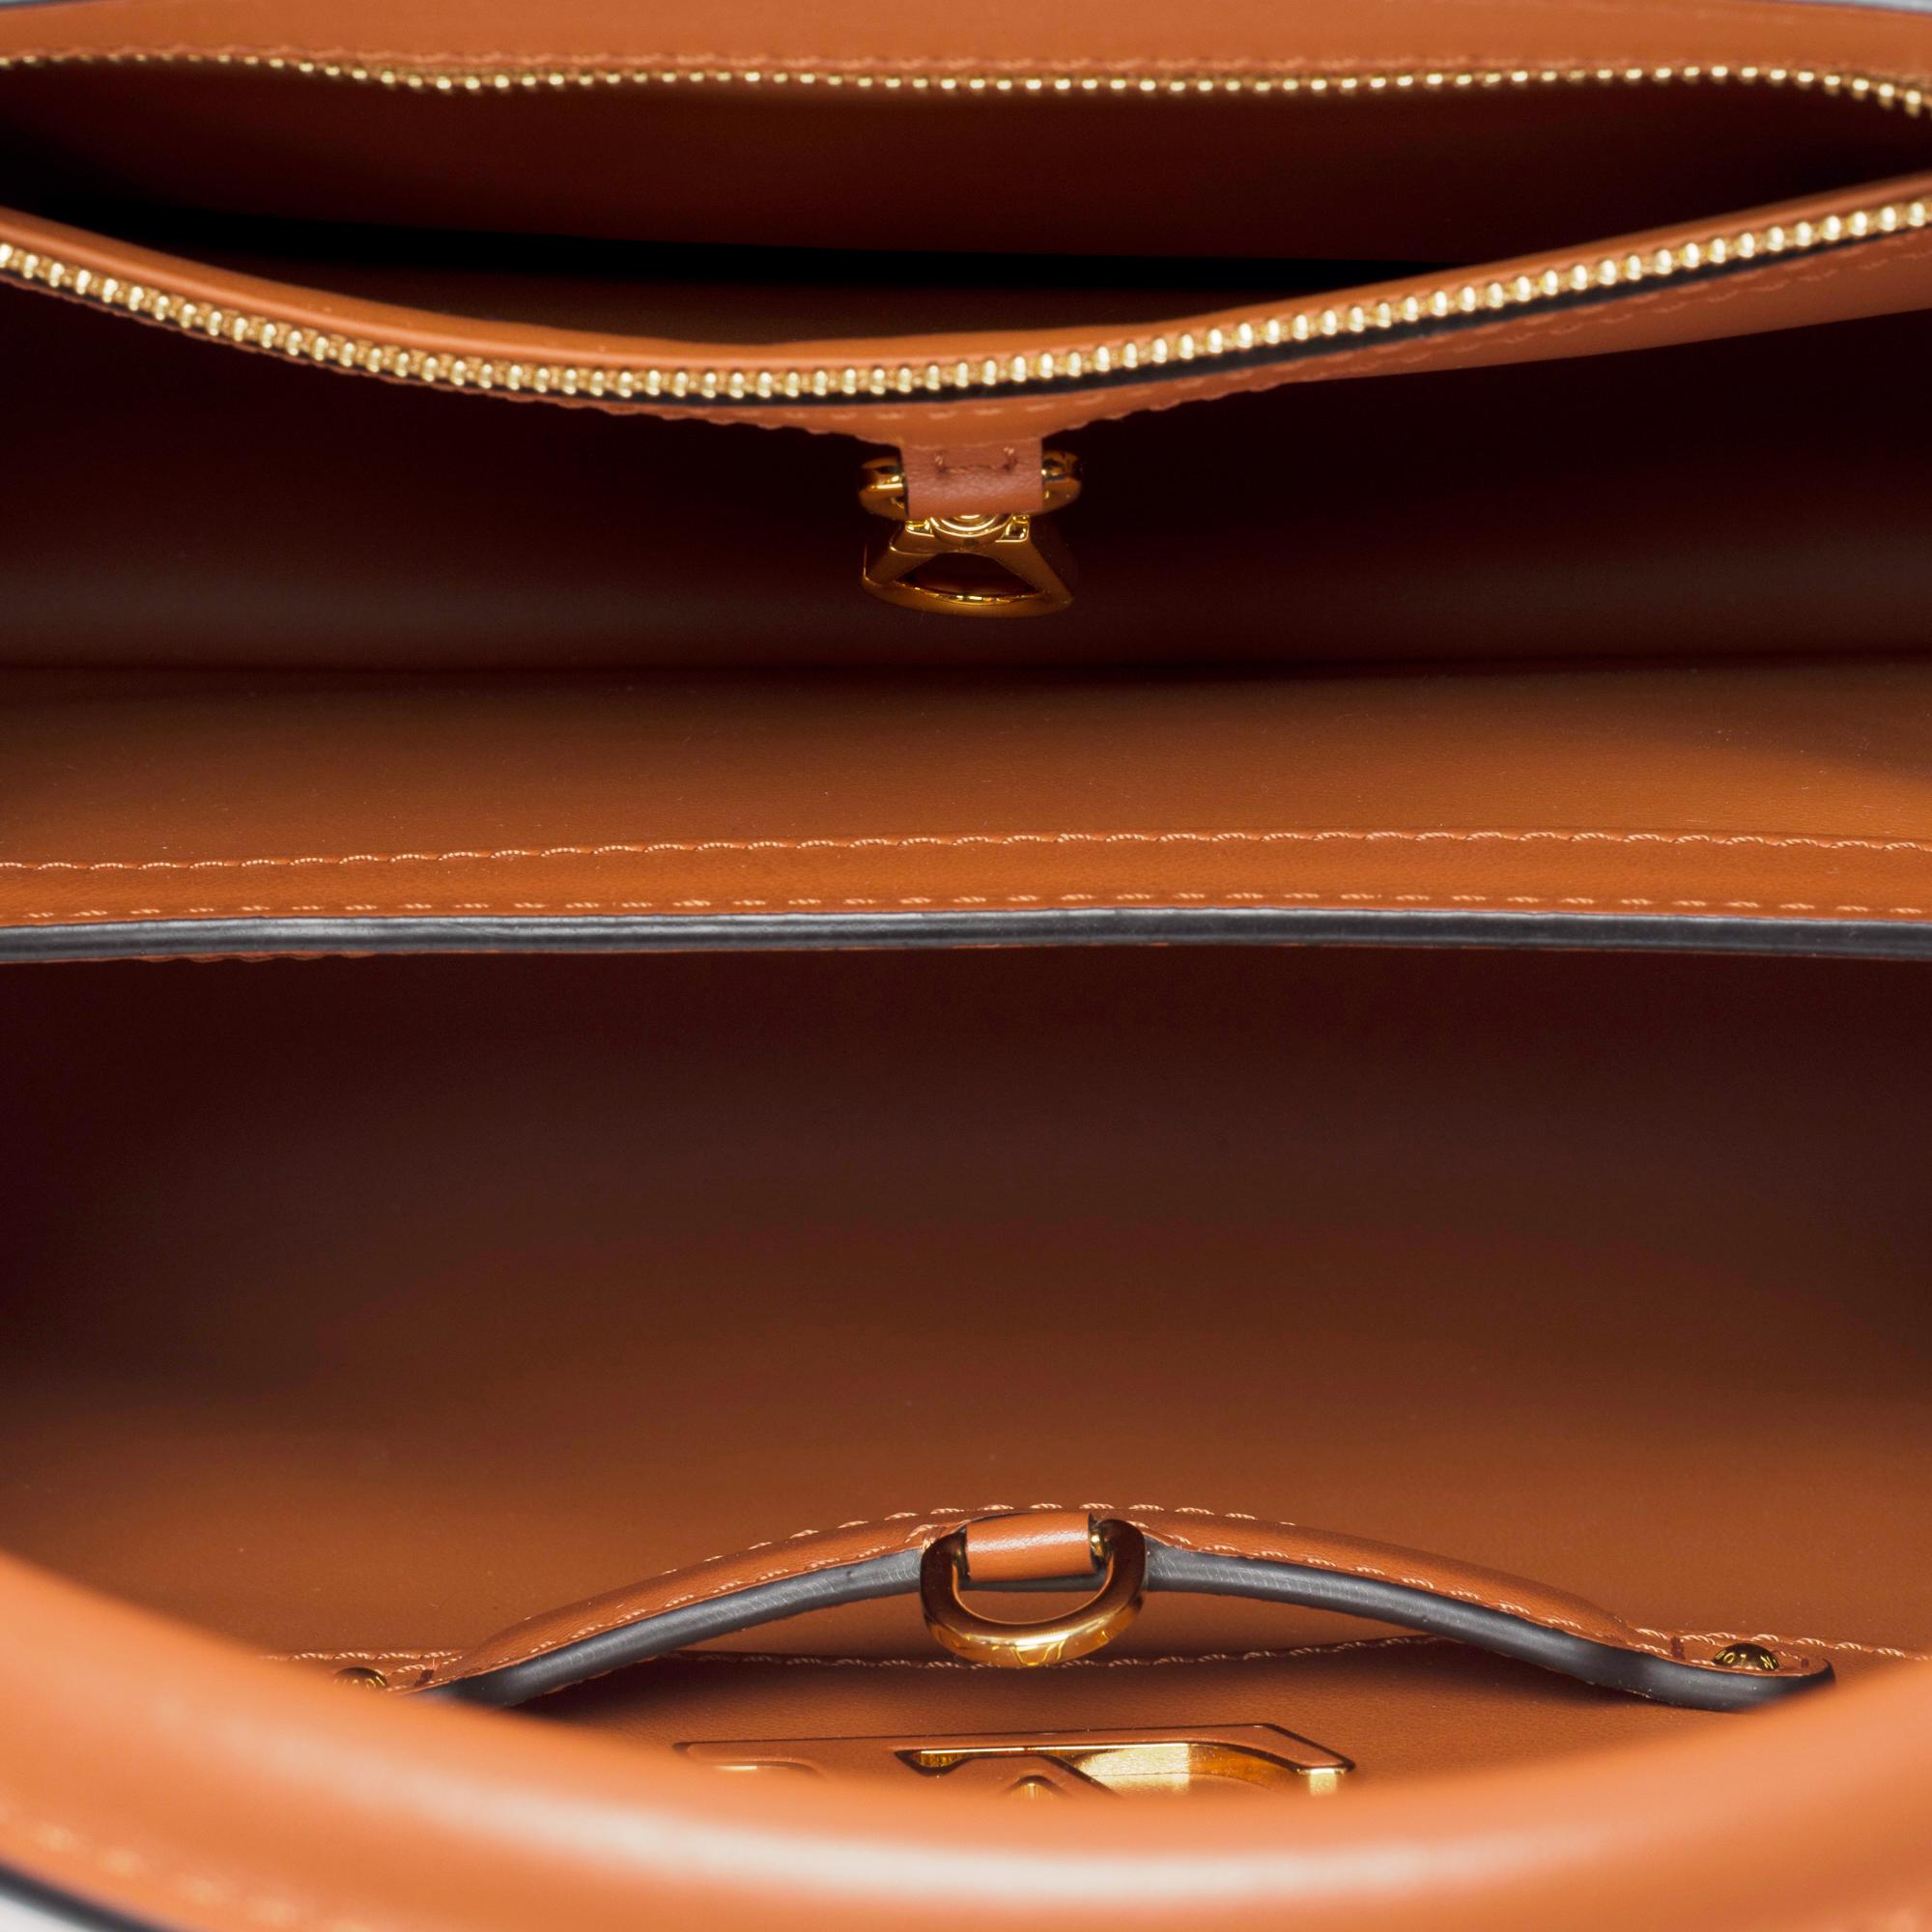 Women's Limited Edition Louis Vuitton Capucines MM handbag strap in braided Raffia, GHW